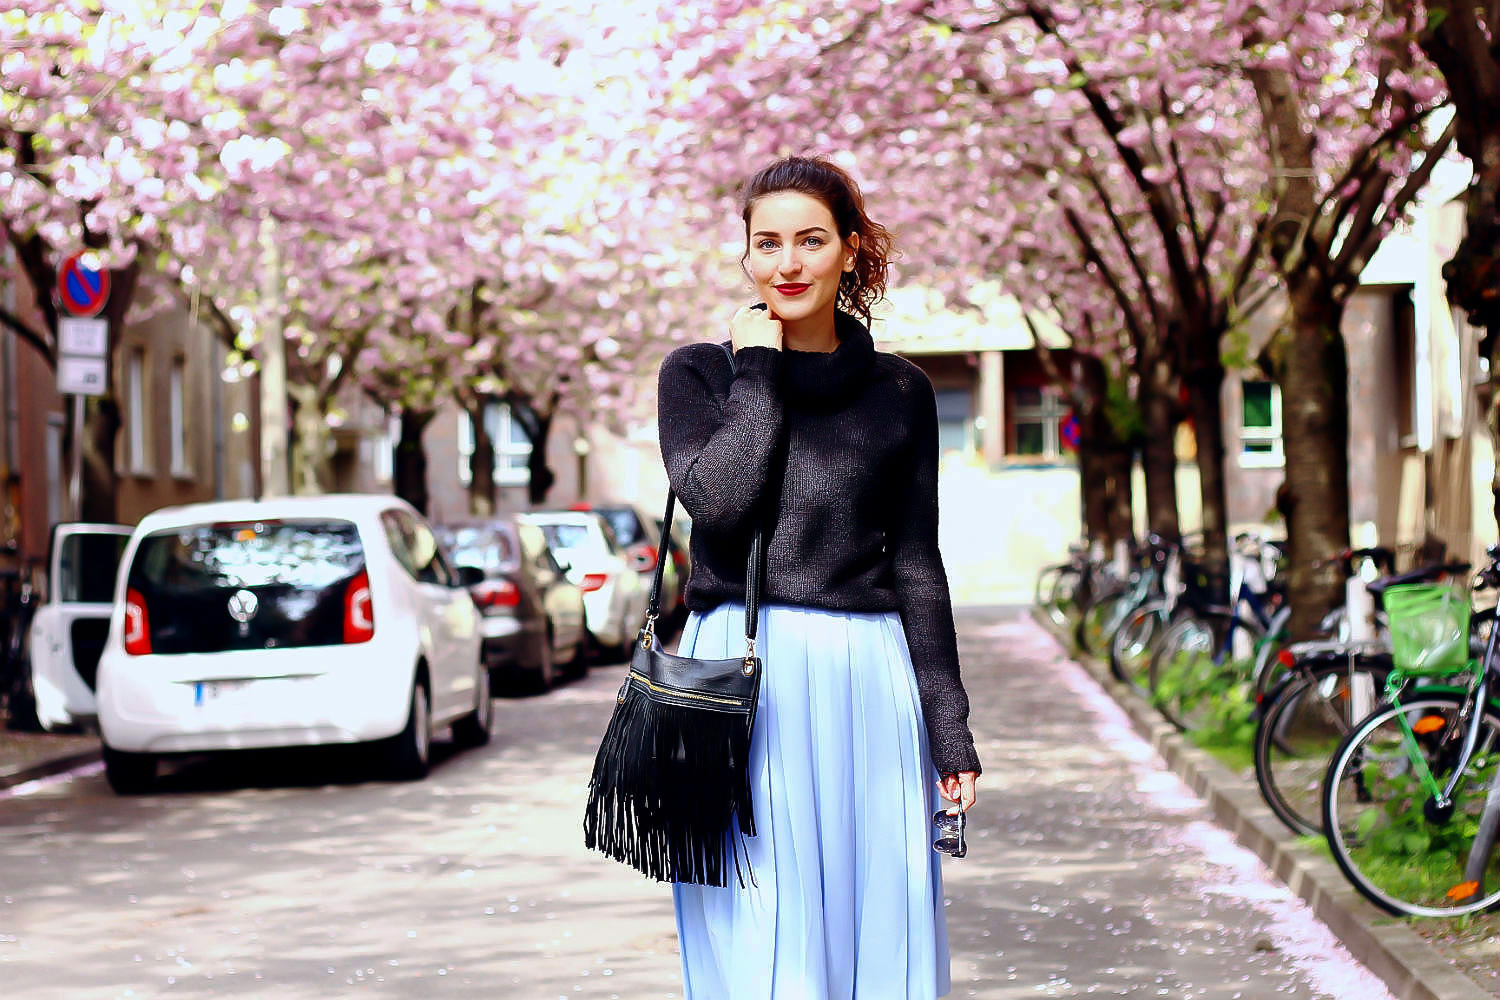 Midi Skirt Asos light blue vintage kitten heel ankle boots outfit streetstyle cherry blossom street berlin spring knitted turtleneck sweater spring looks-7